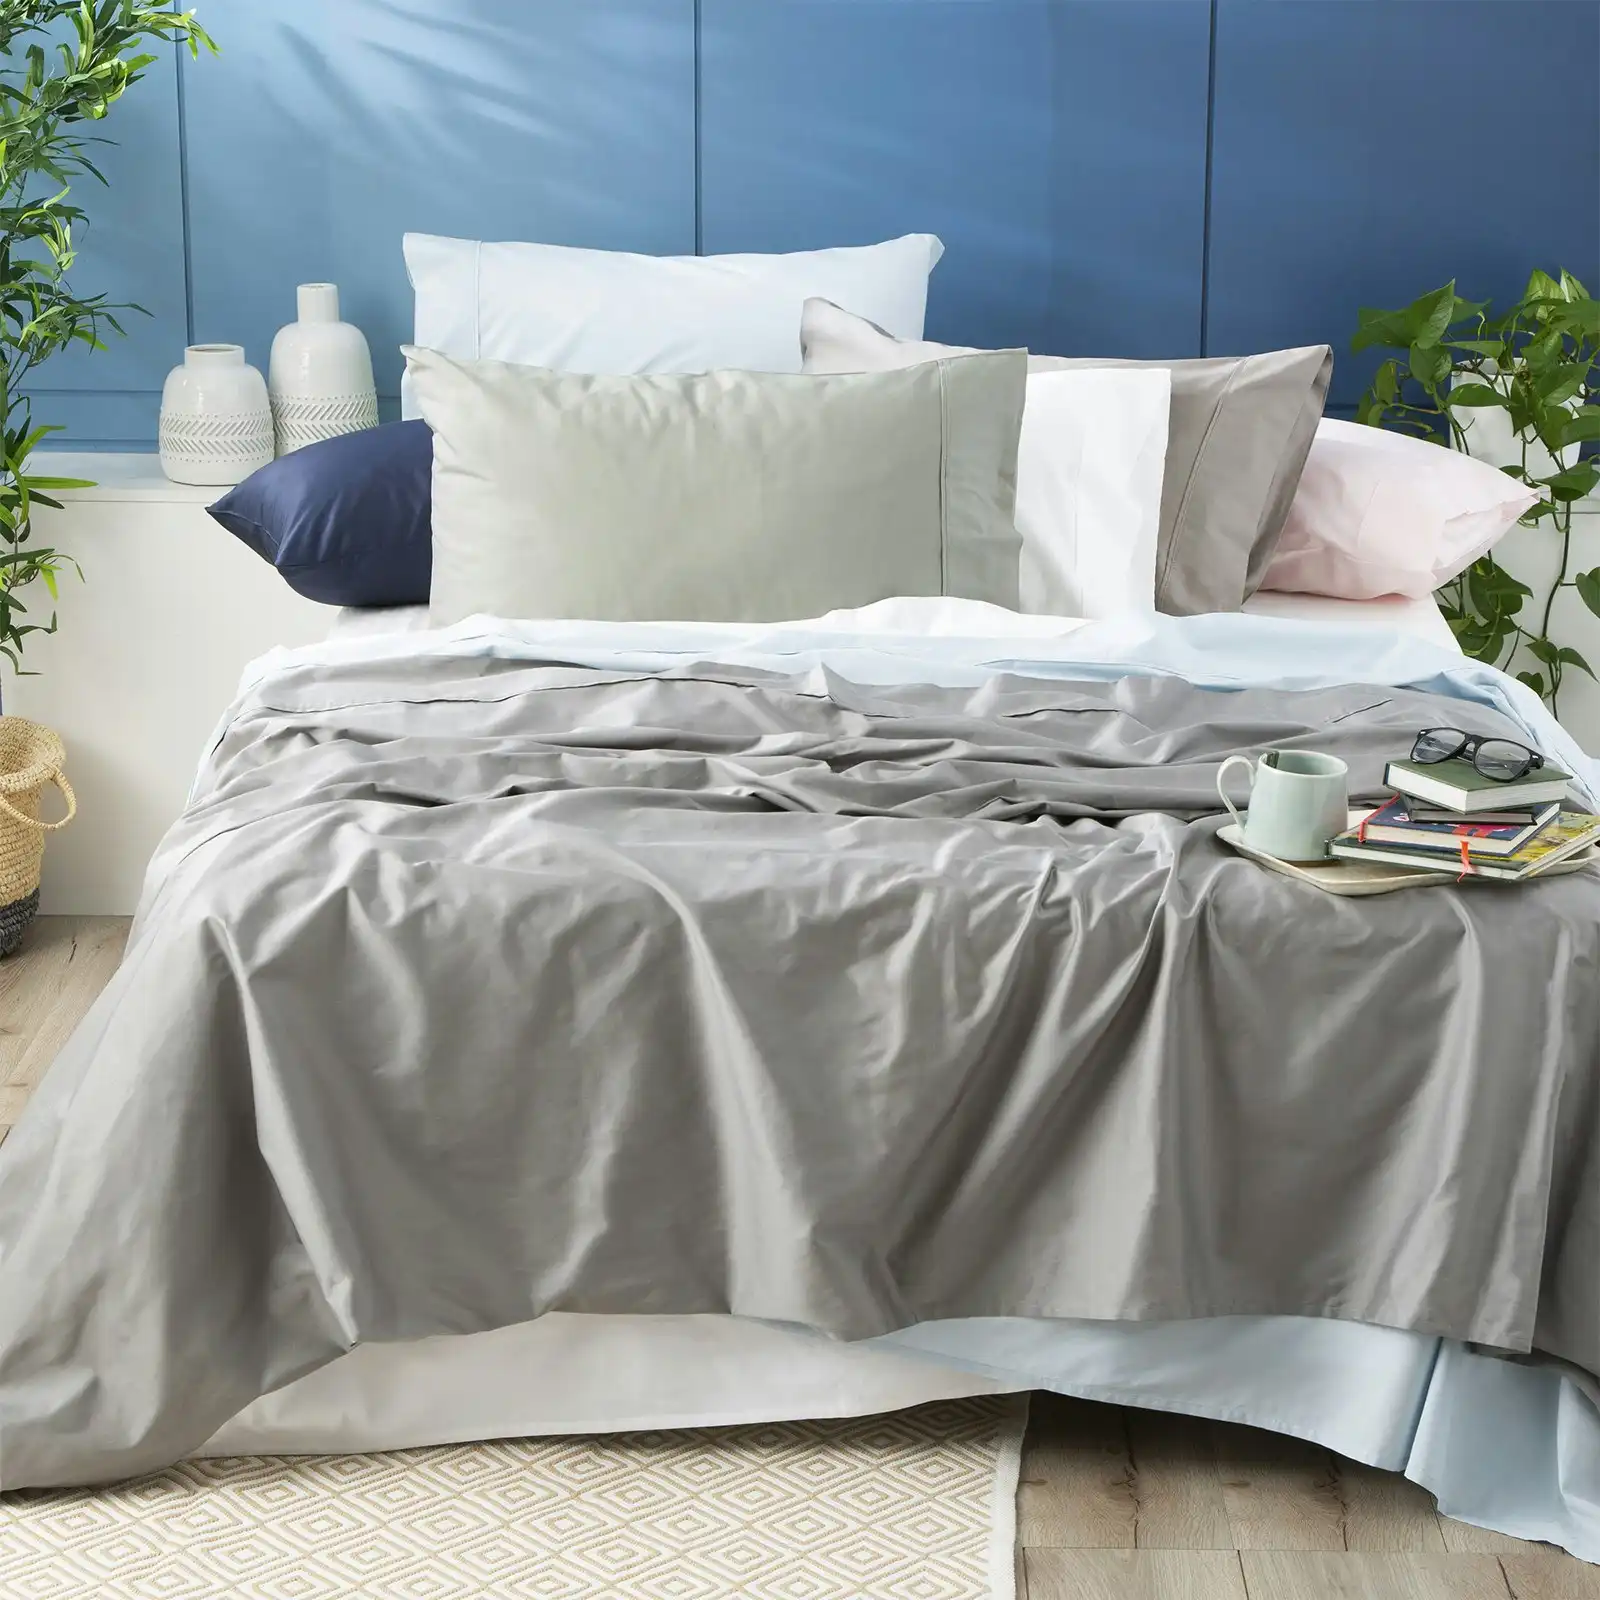 Park Avenue King Bed Sheet/Pillowcases Set 500TC Bamboo Cotton Bedding Pewter